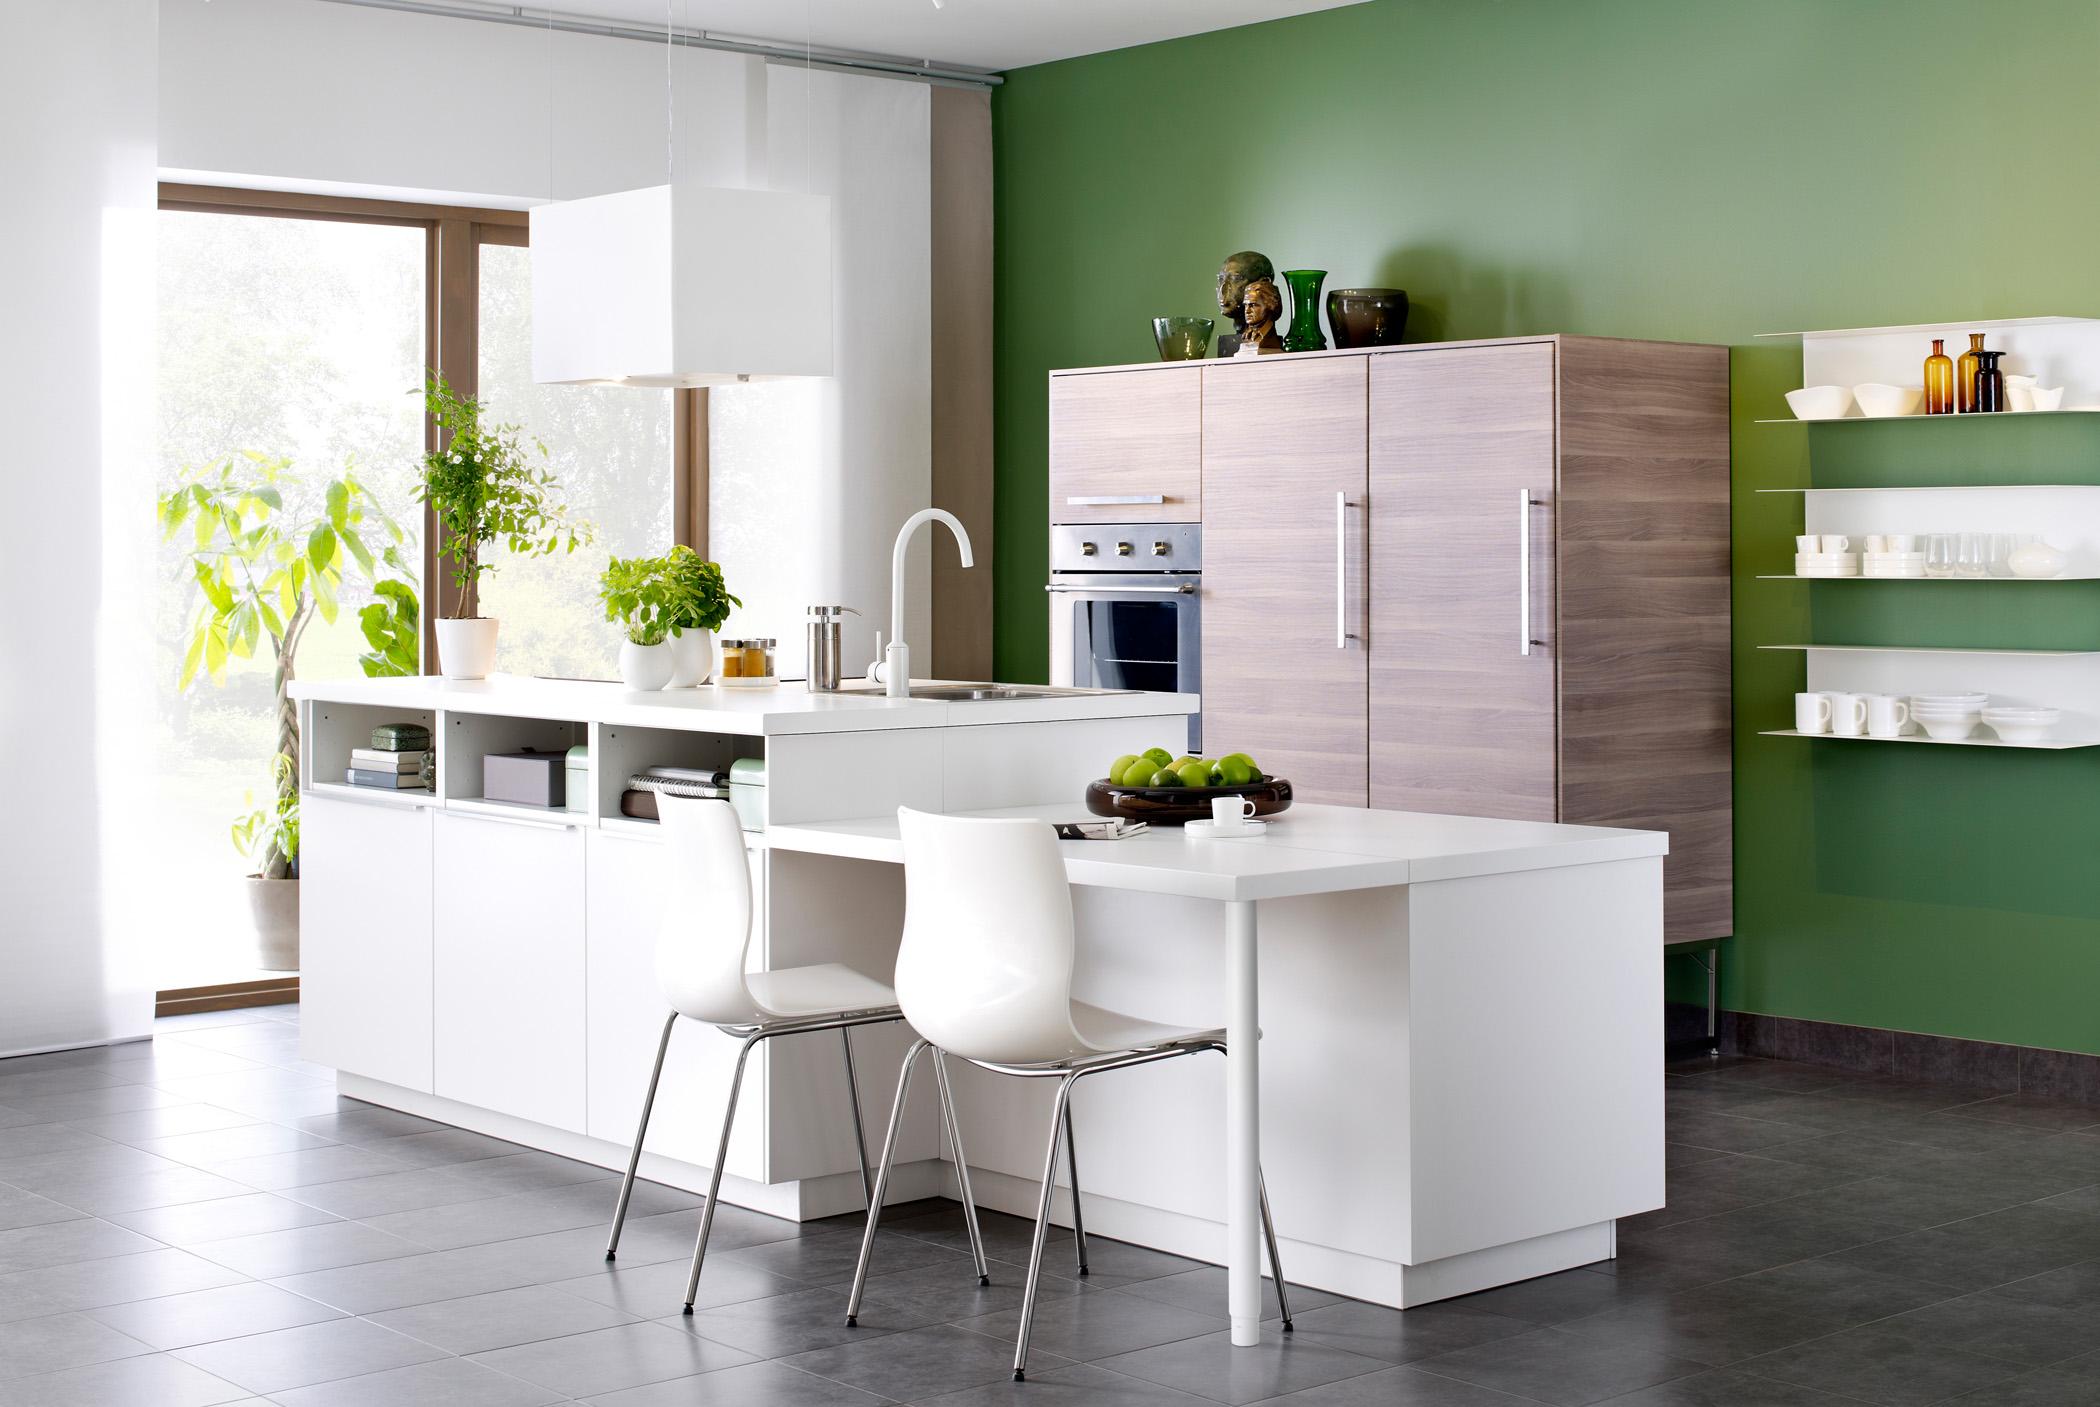 Grüne Küchenwand #ikea #kücheninsel #küchenblock #grauefliesen #grünewandfarbe #weißekücheninsel ©Inter IKEA Systems B.V.